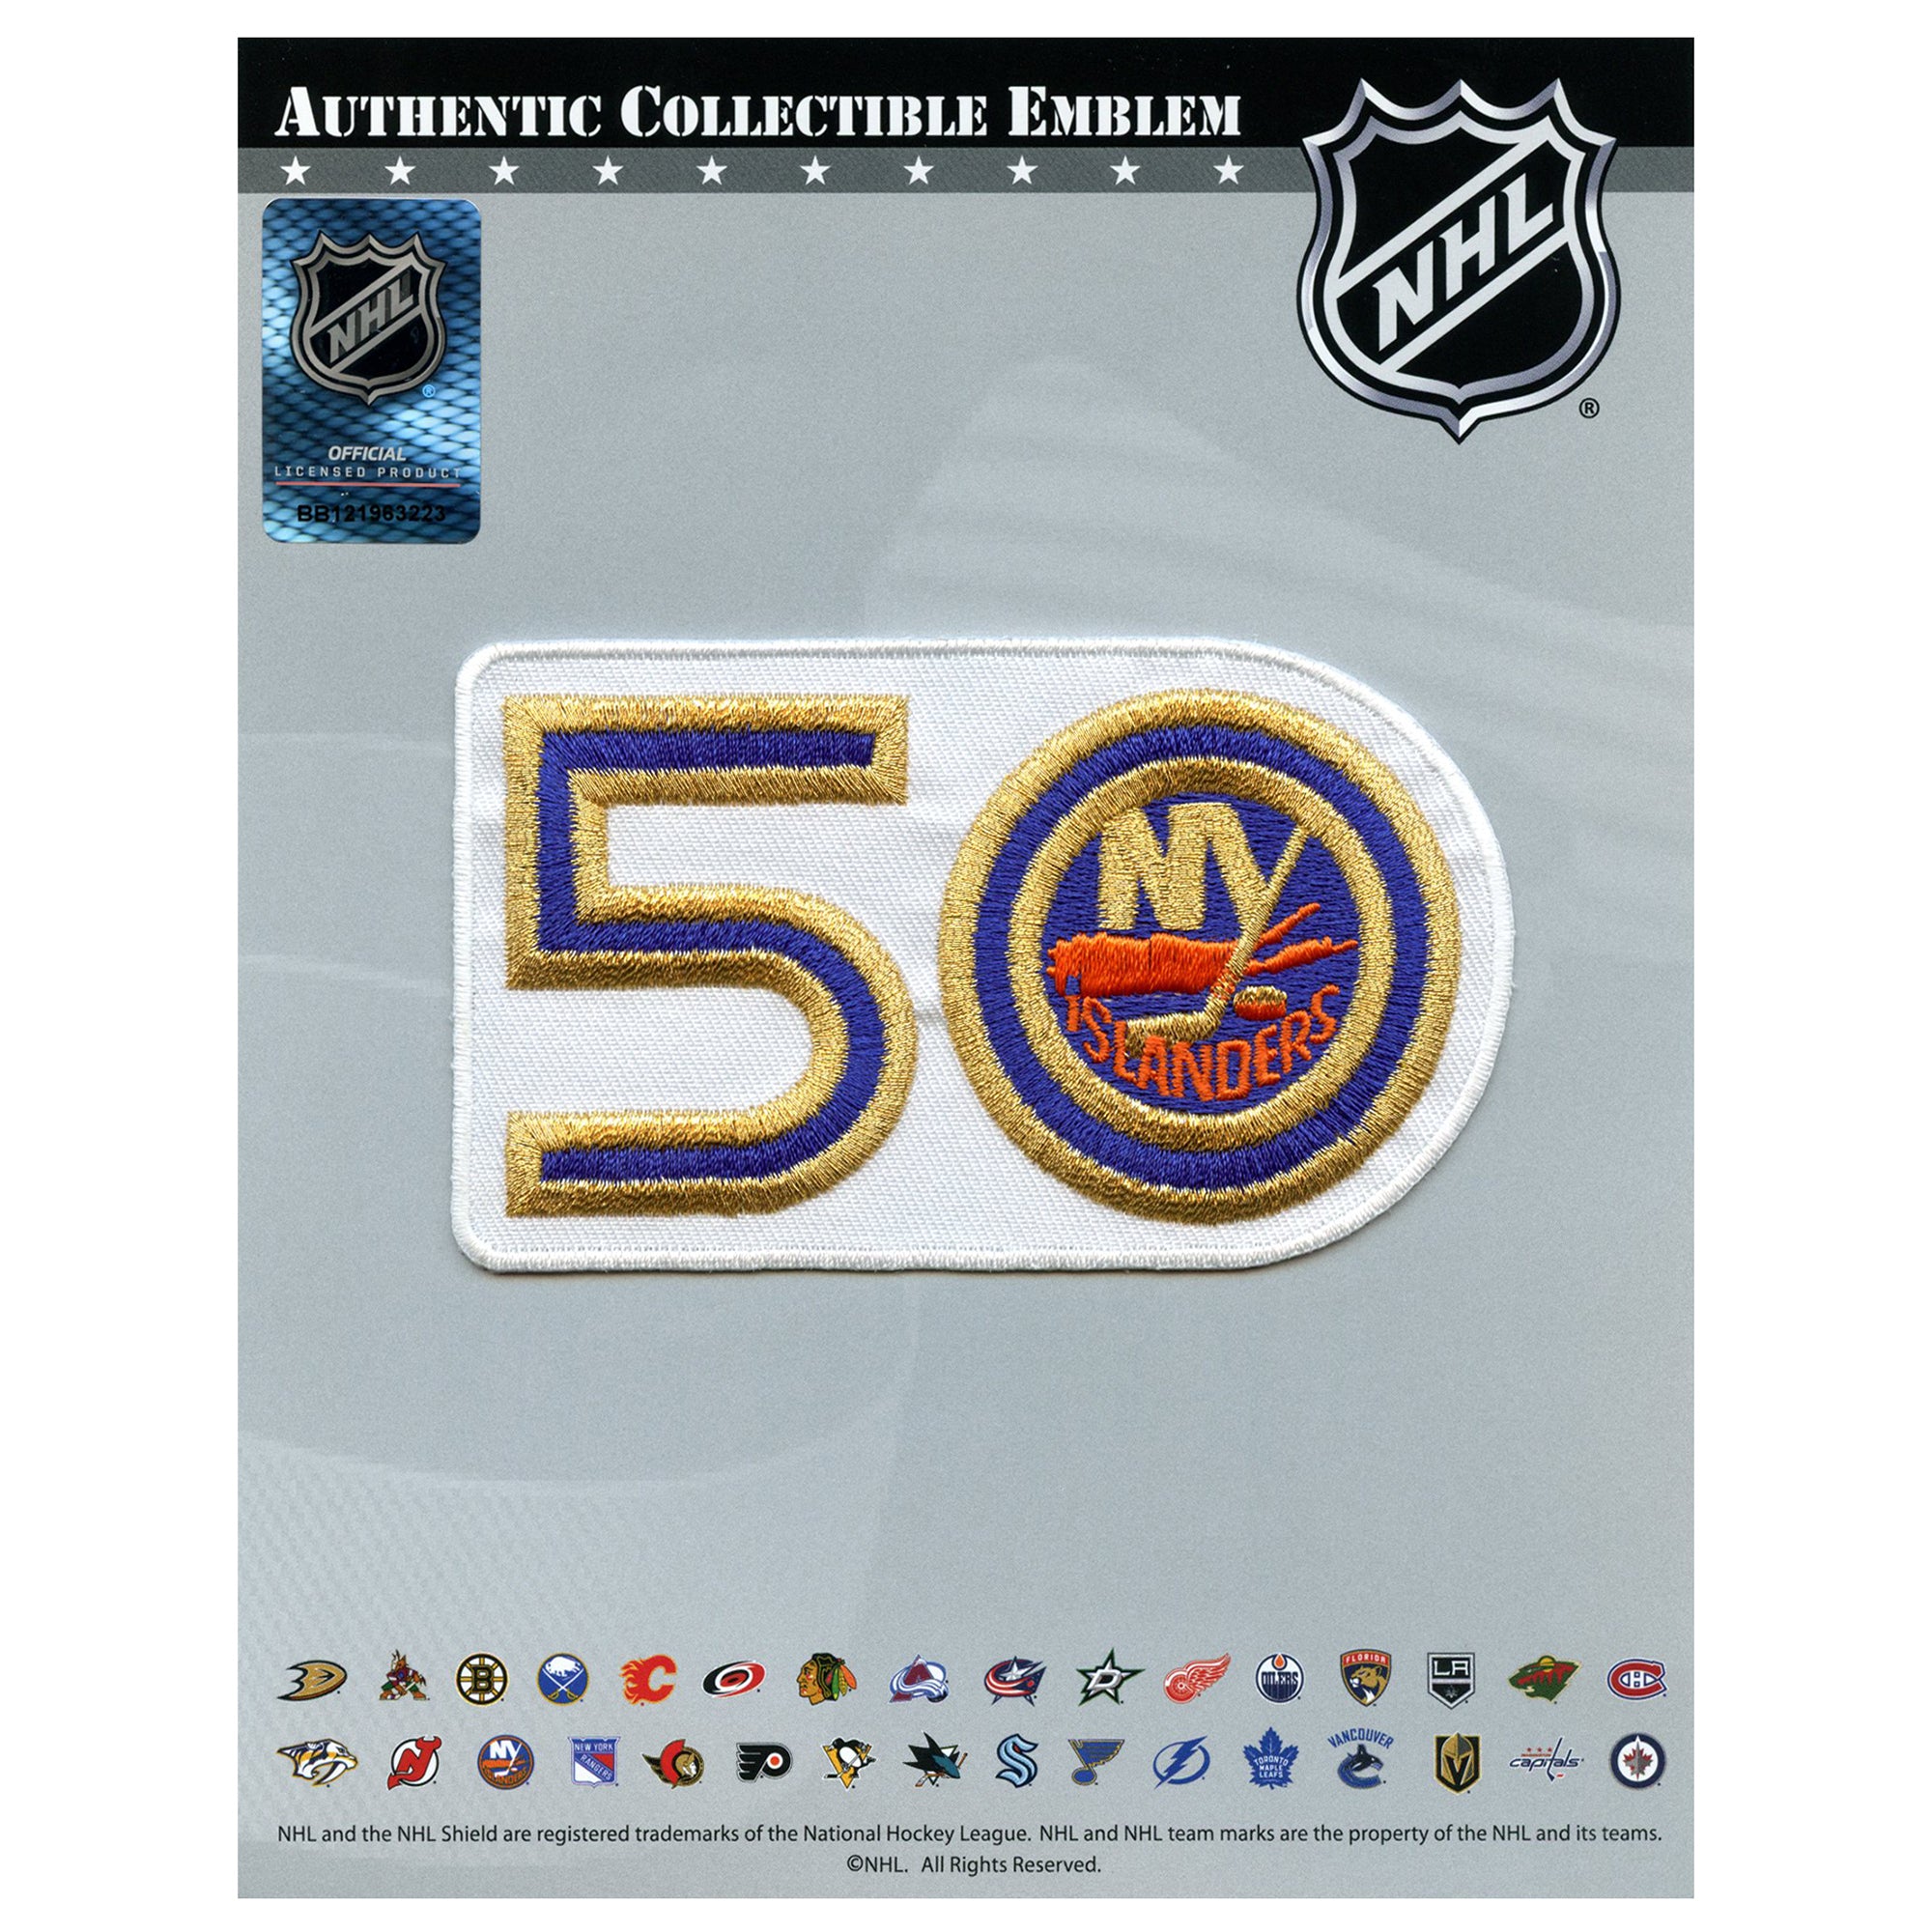 Jackpocket Named Home Helmet Sponsor for NY Islanders 50th Anniversary  Season